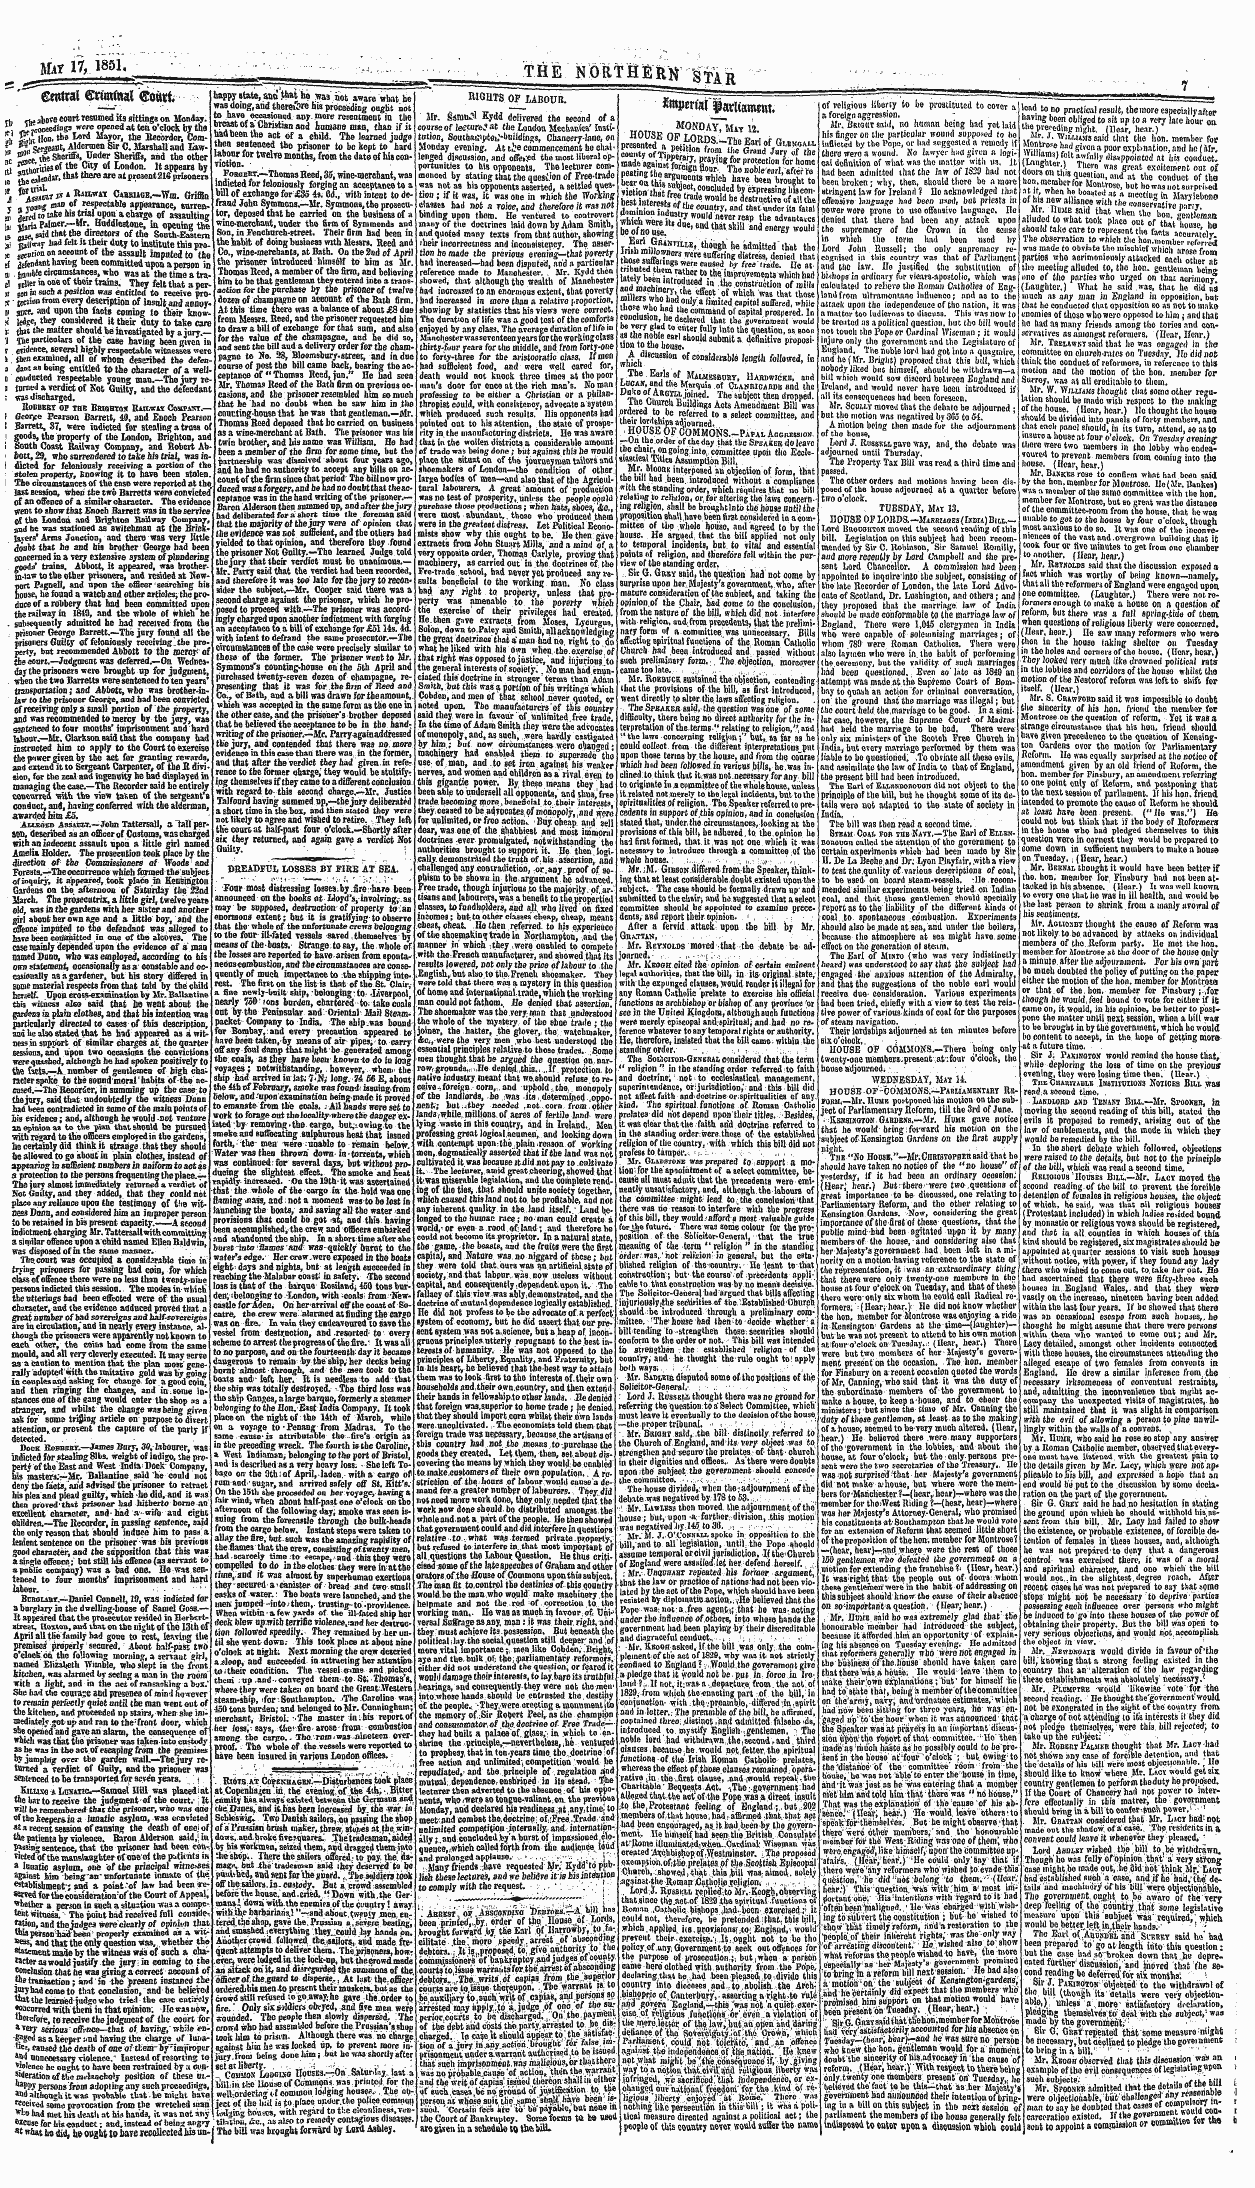 Northern Star (1837-1852): jS F Y, 2nd edition - ' . ' Abrkstz 0* Abscondi-Vci Dfbroefl.—...